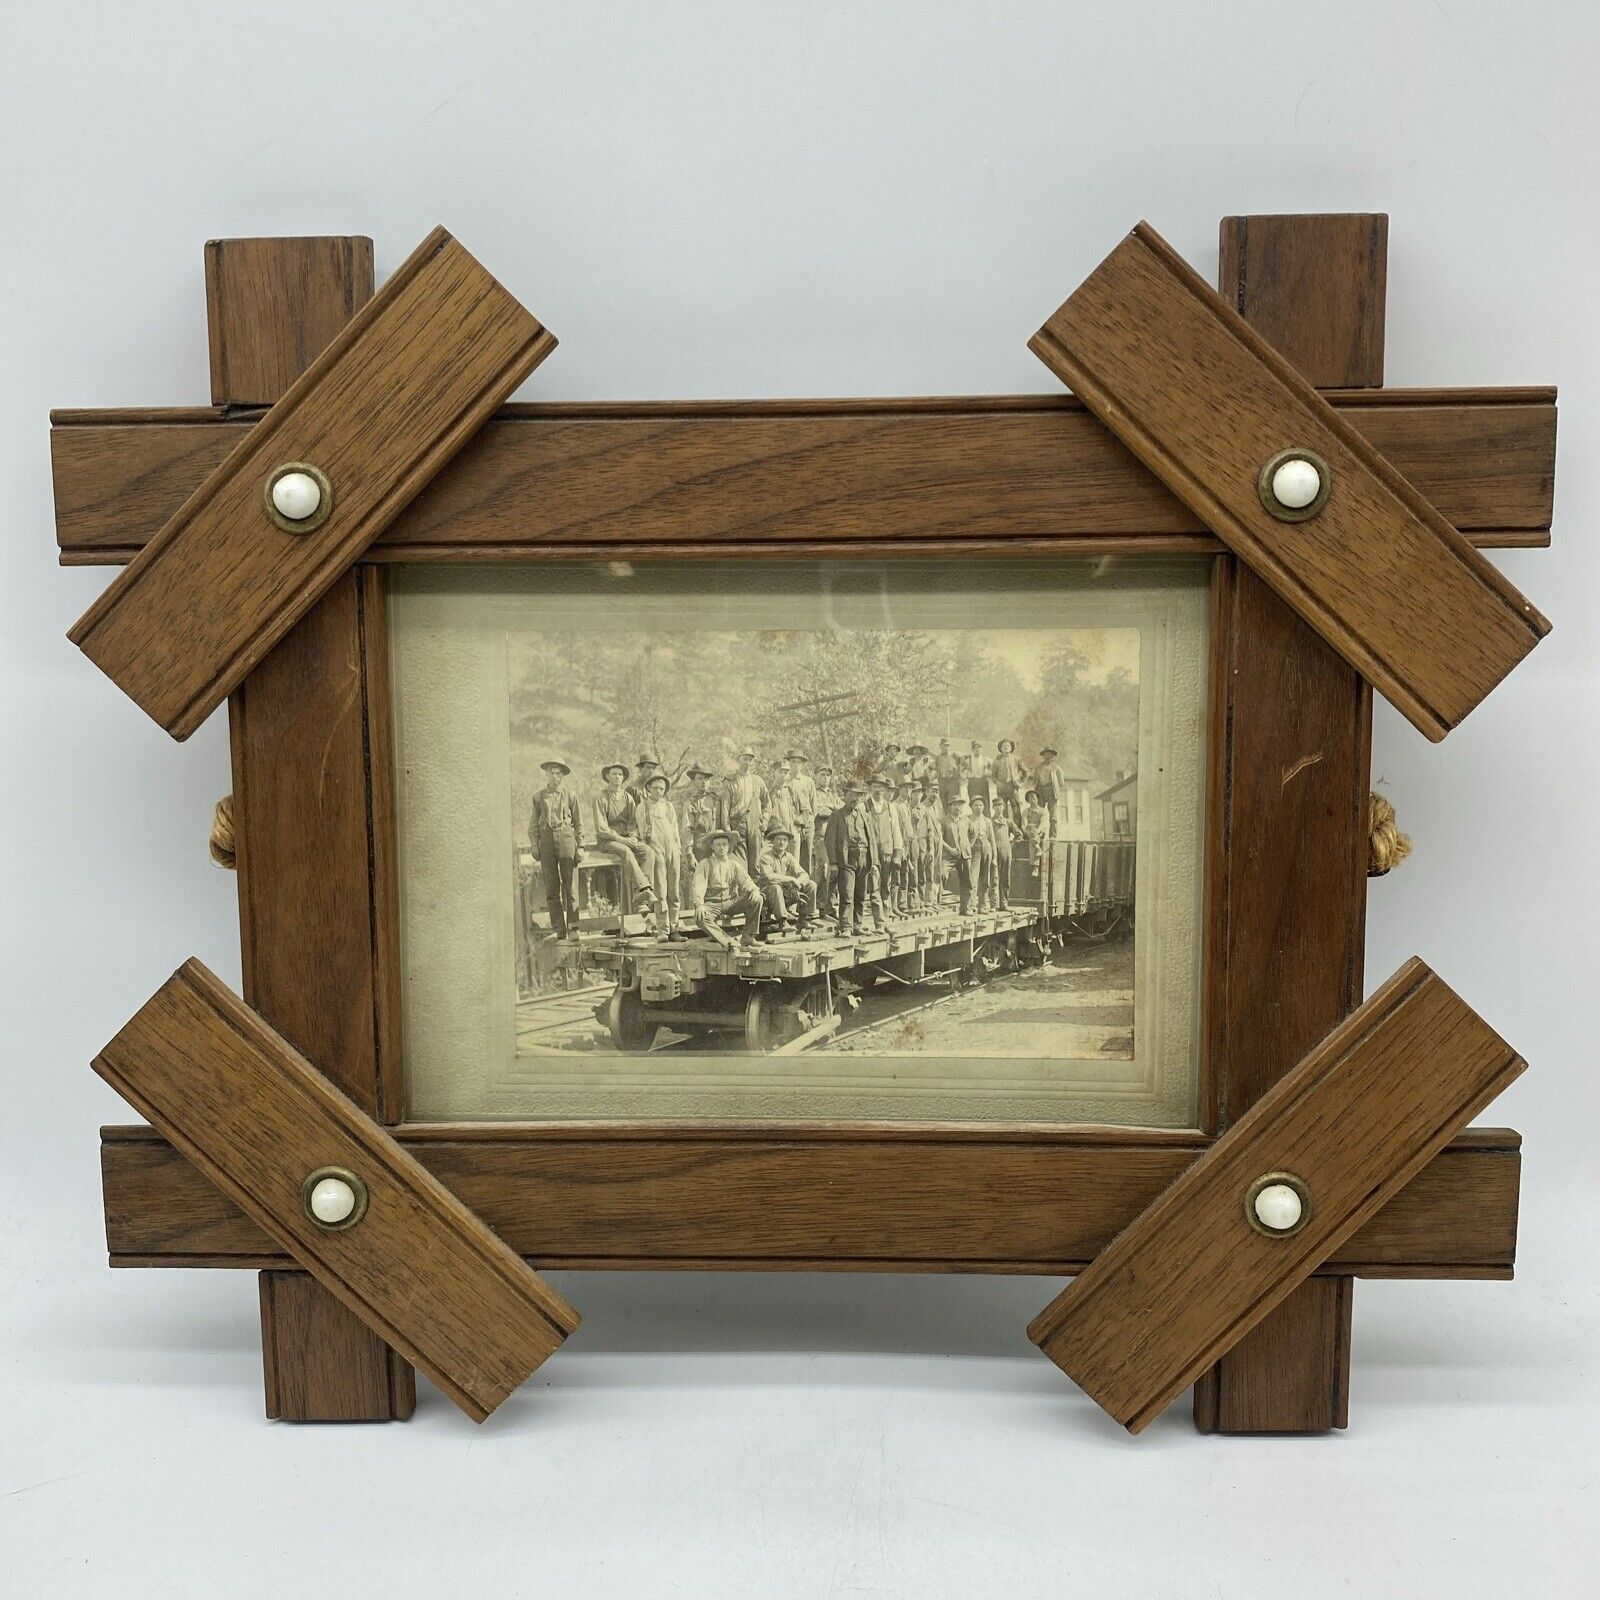 Excellent Victorian Era Folk Art Tramp Framed Photo Of Railroad Workers 13x11”